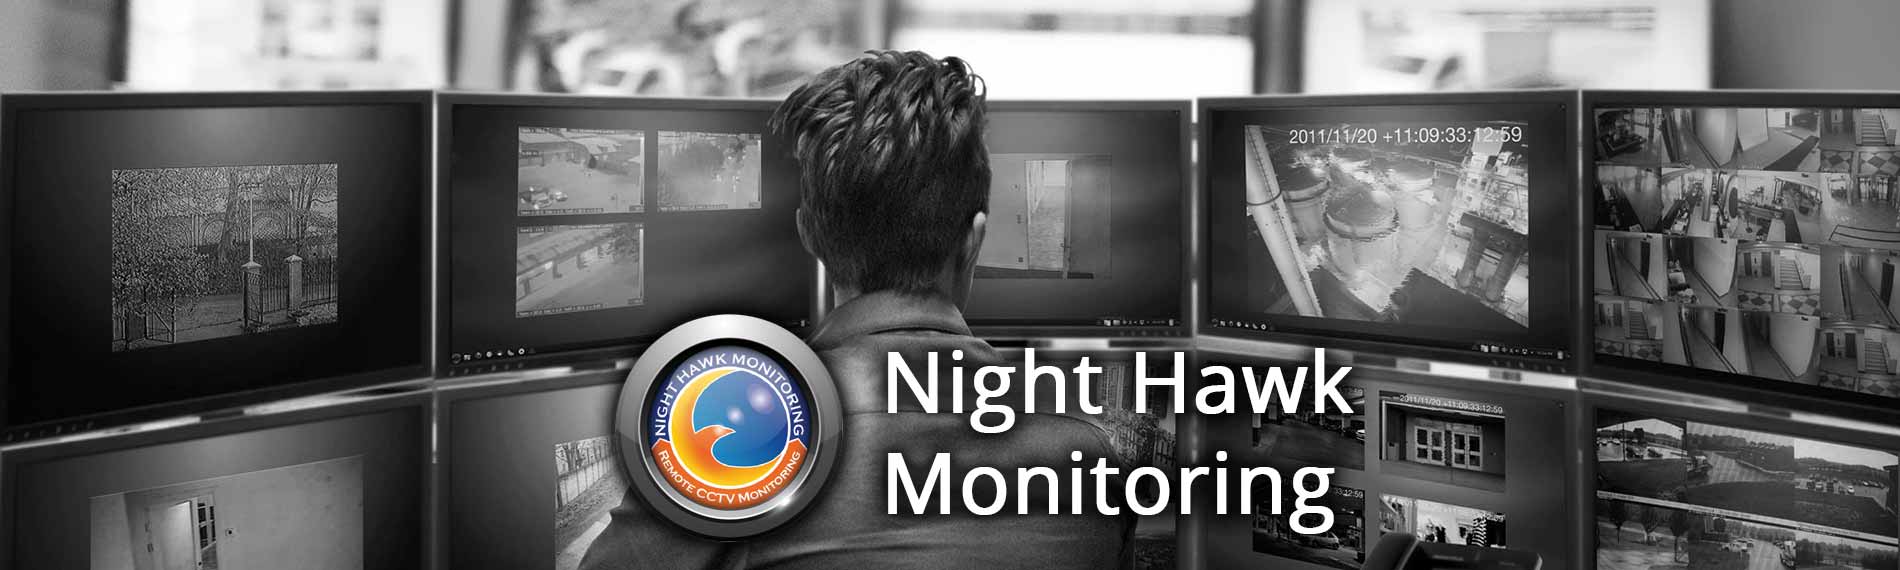 Remote Video Surveillance Indianapolis - Remote Video Surveillance Monitoring - Live Security Cameras Monitoring Indianapolis